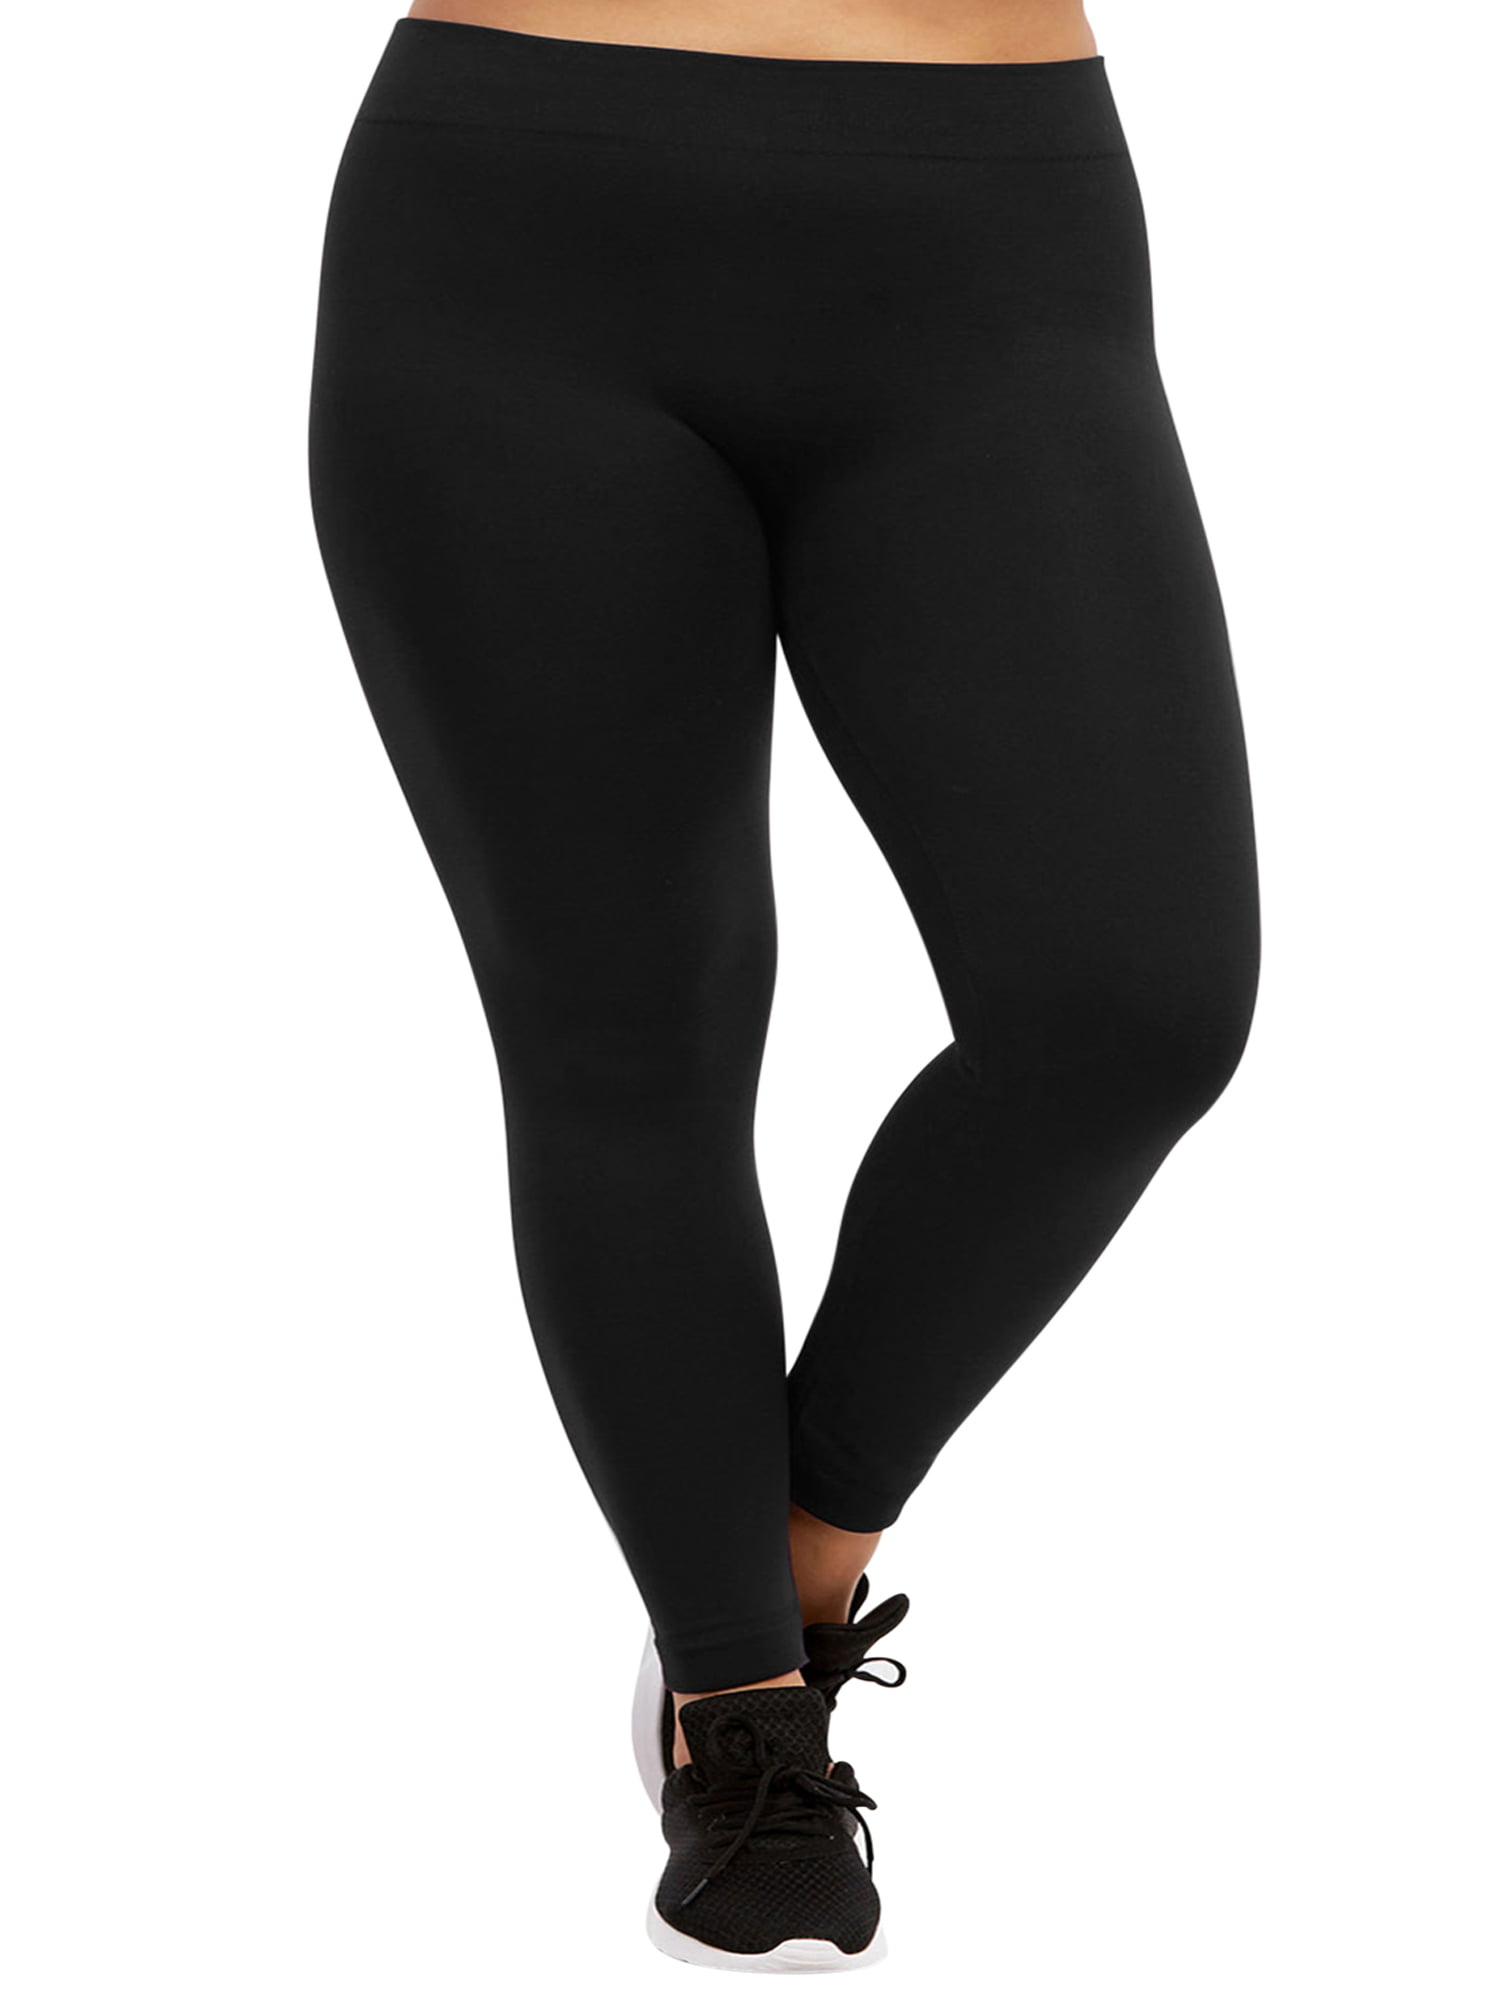 Plus Size Black Fleece Lined Leggings - Walmart.com